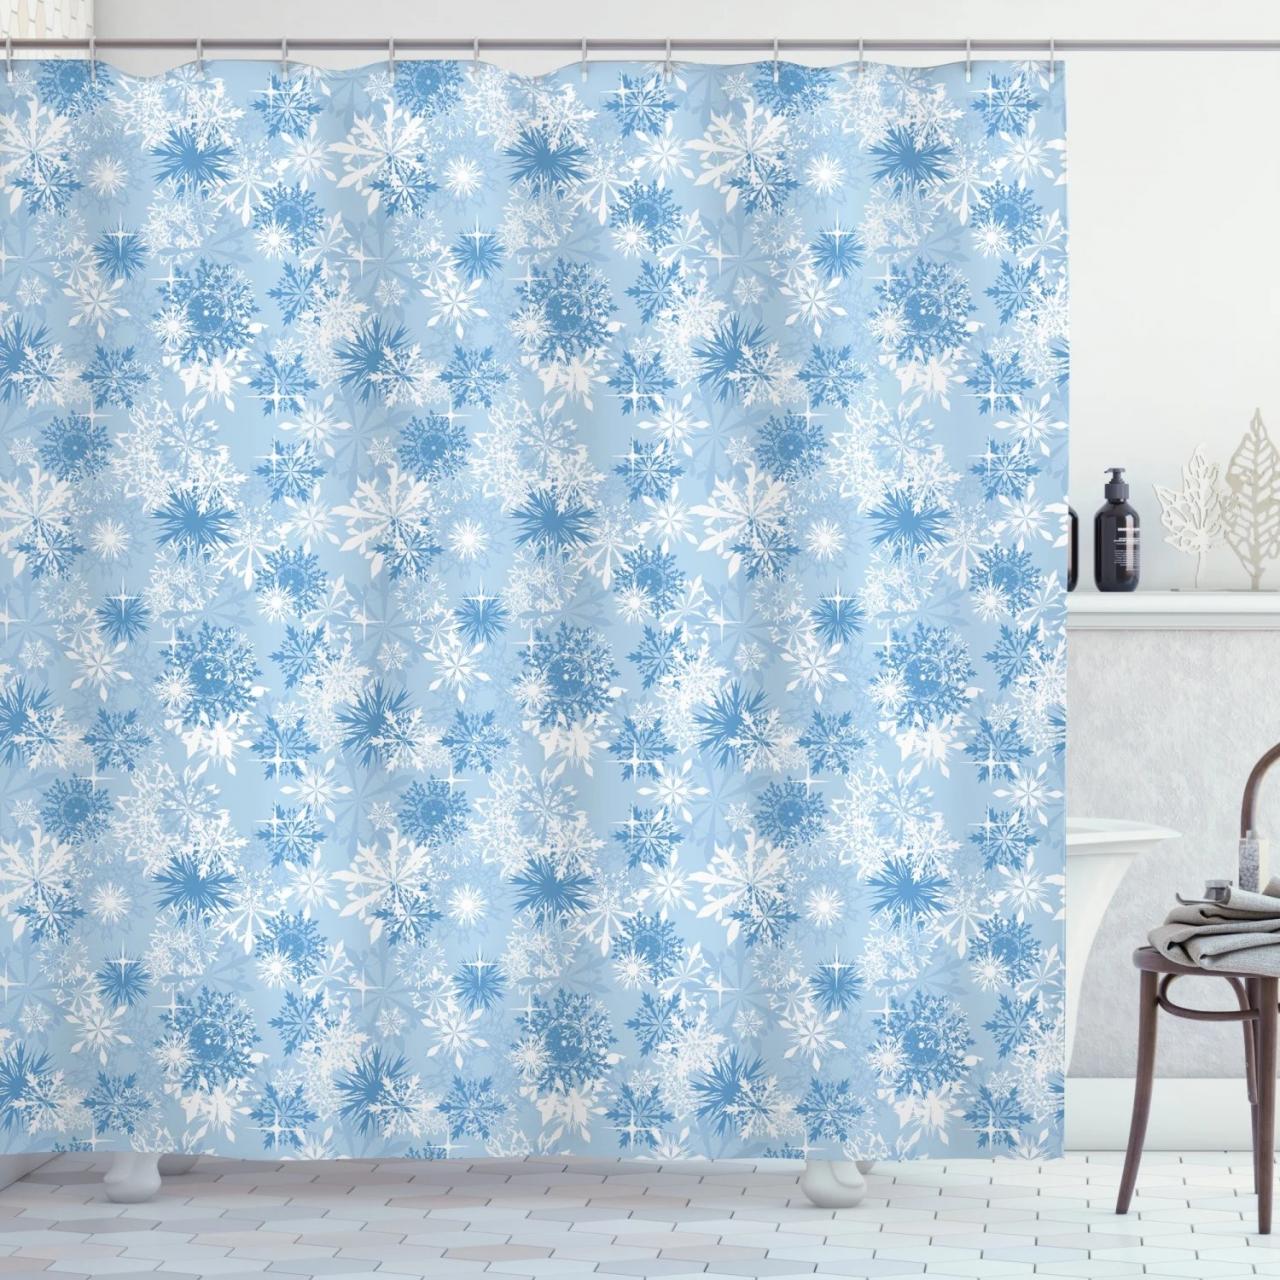 Snowflake Shower Curtain, Winter Holiday Illustration Christmas